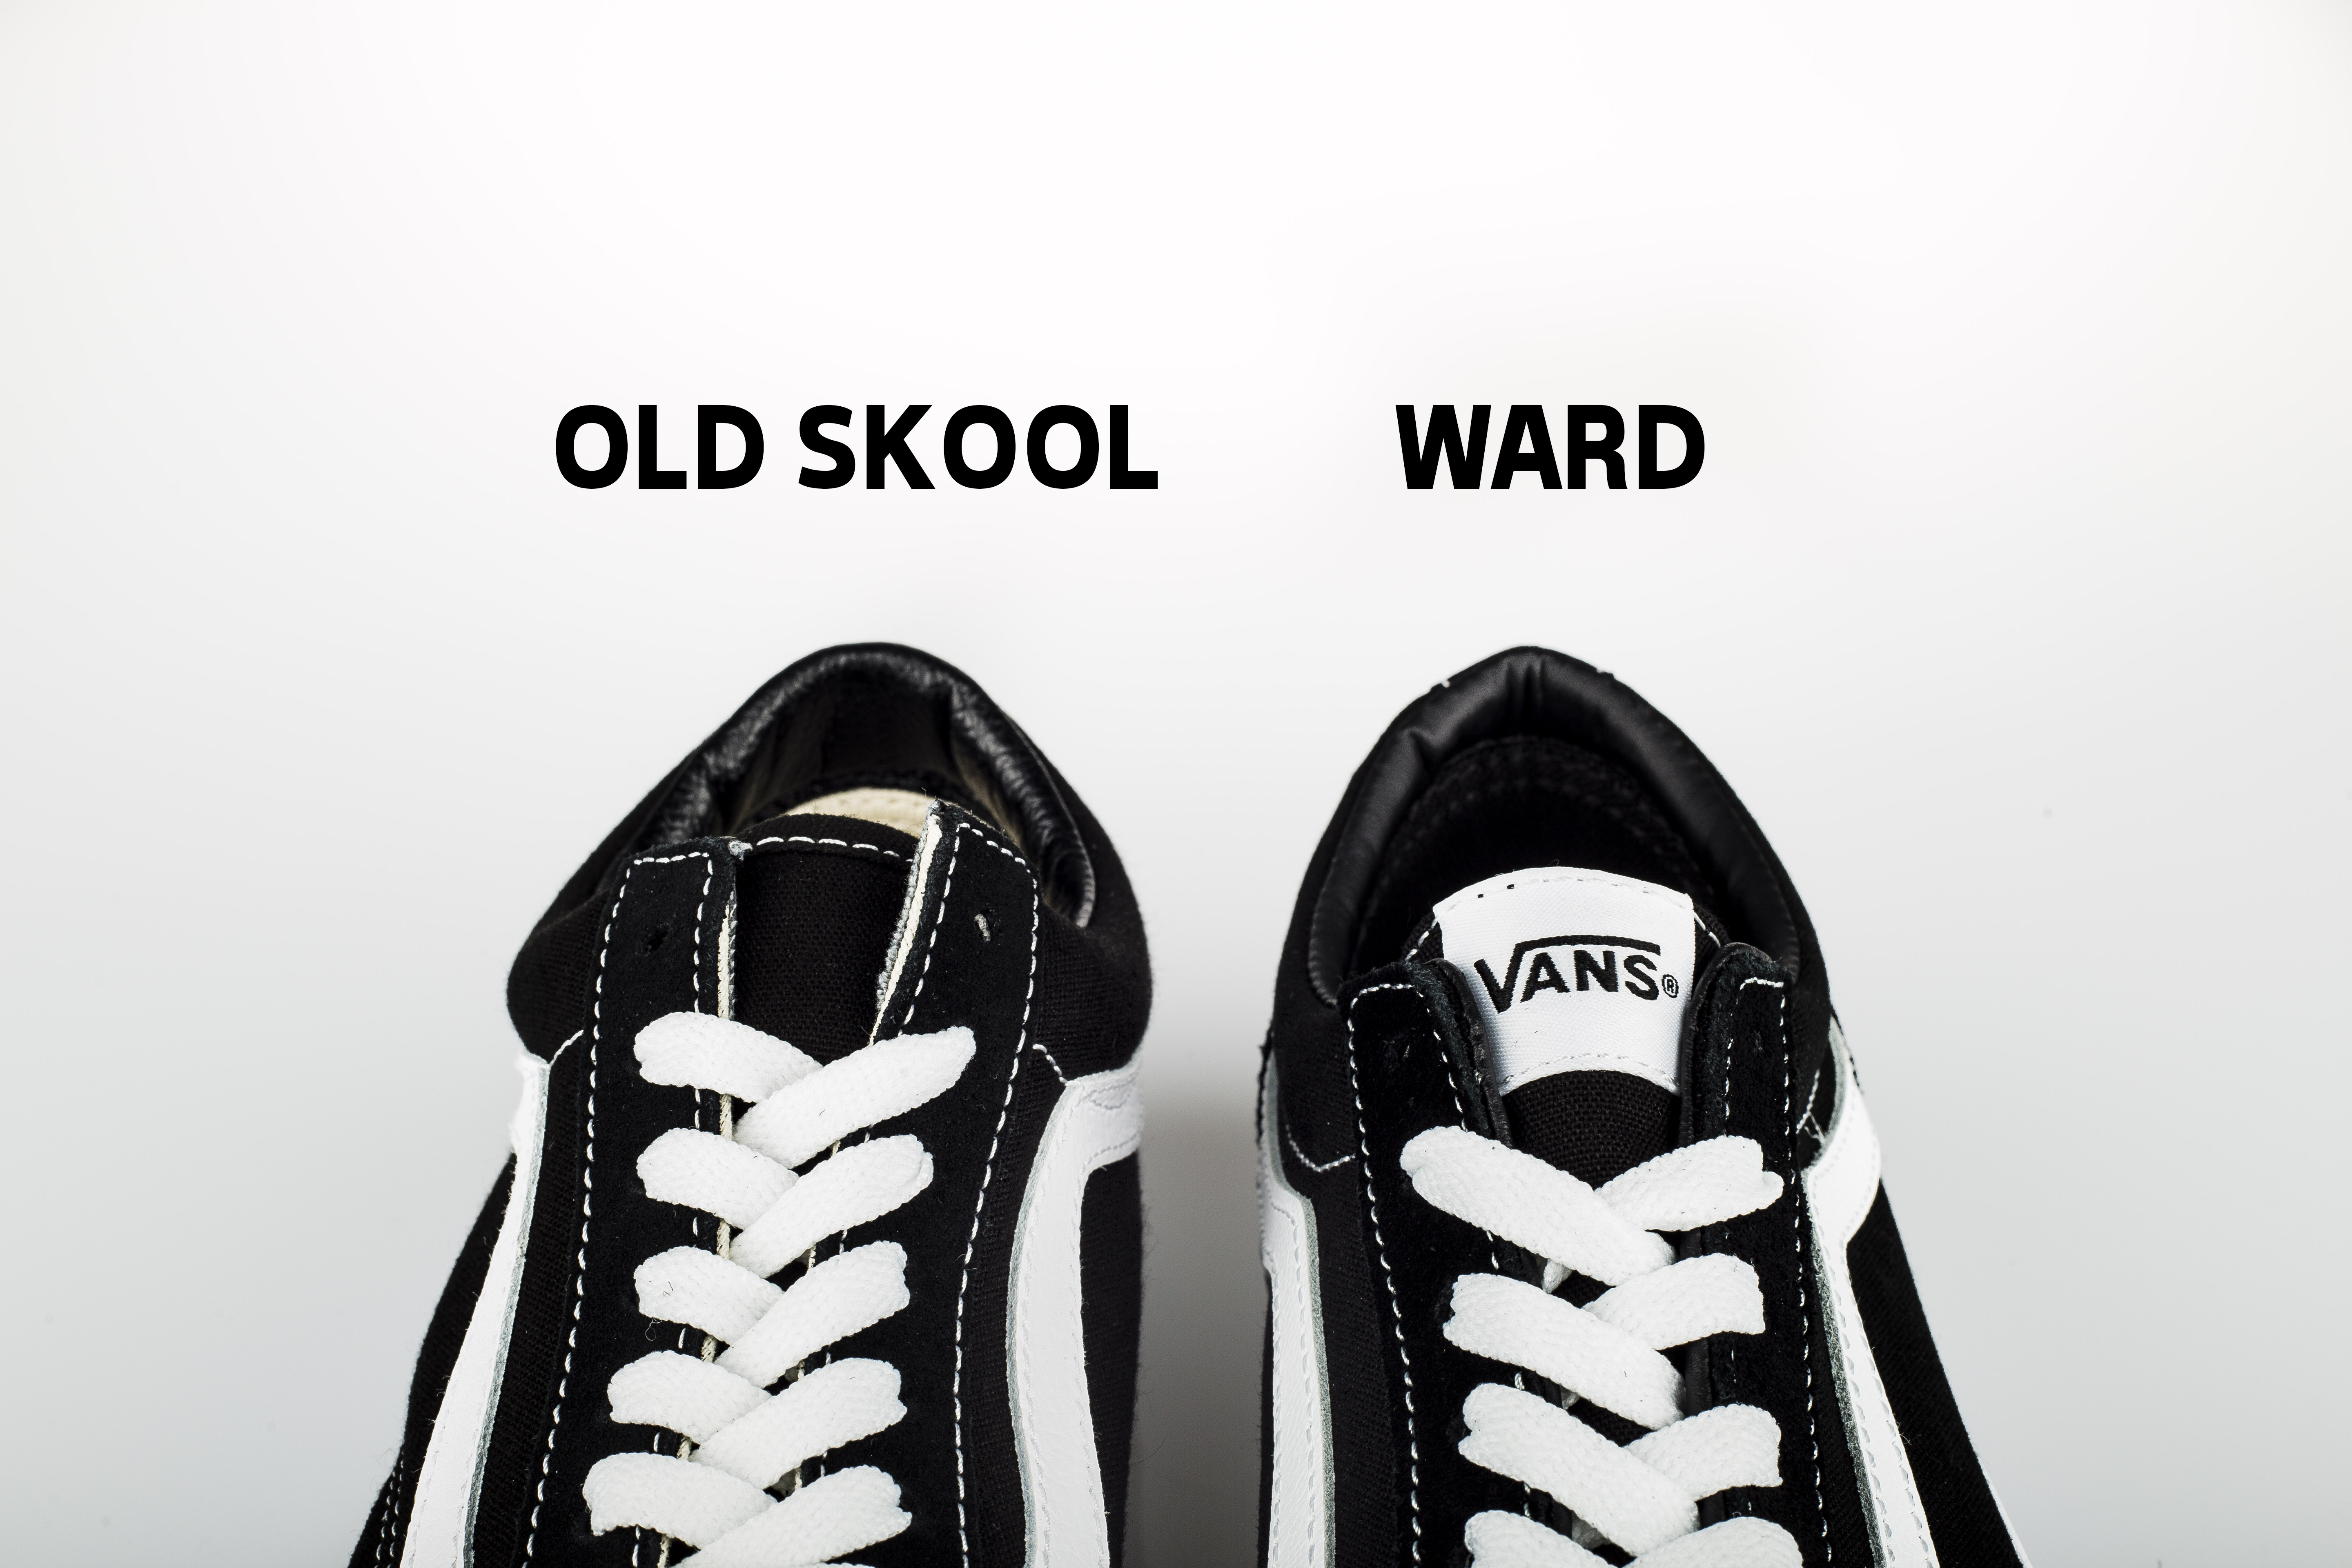 vans ward o old skool